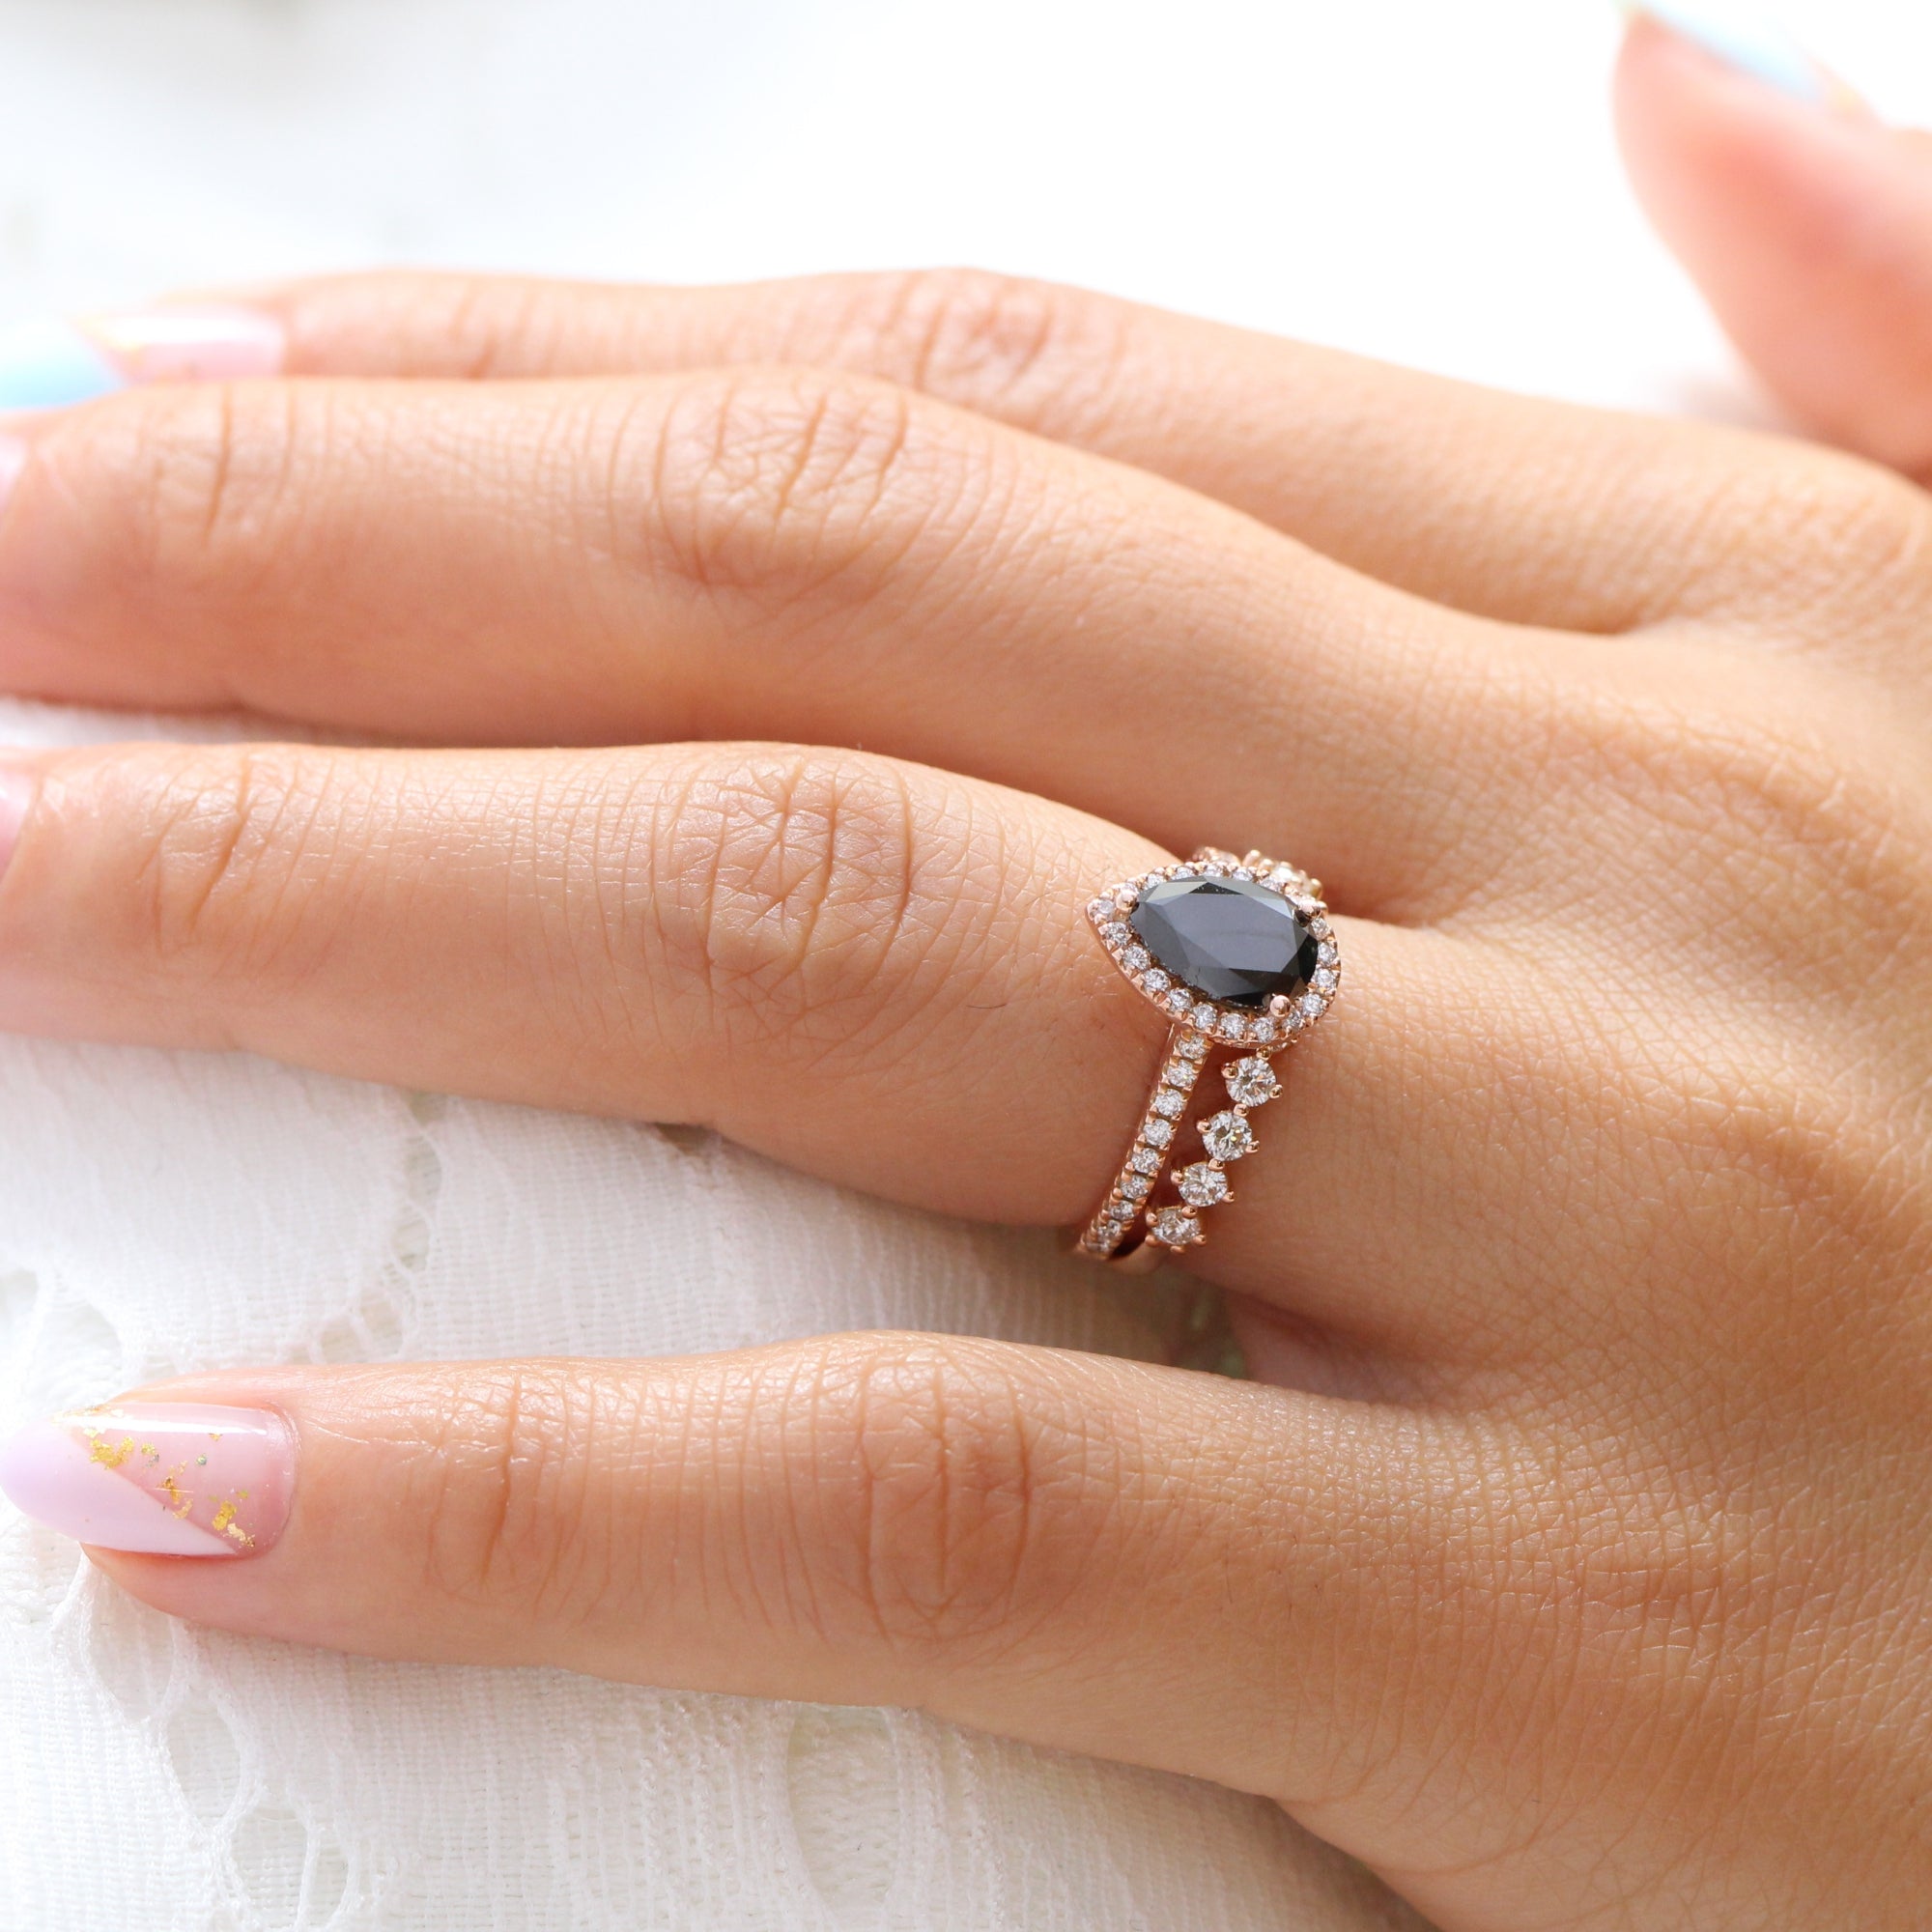 pear black diamond ring rose gold matching diamond wedding band stacking rings la more design jewelry